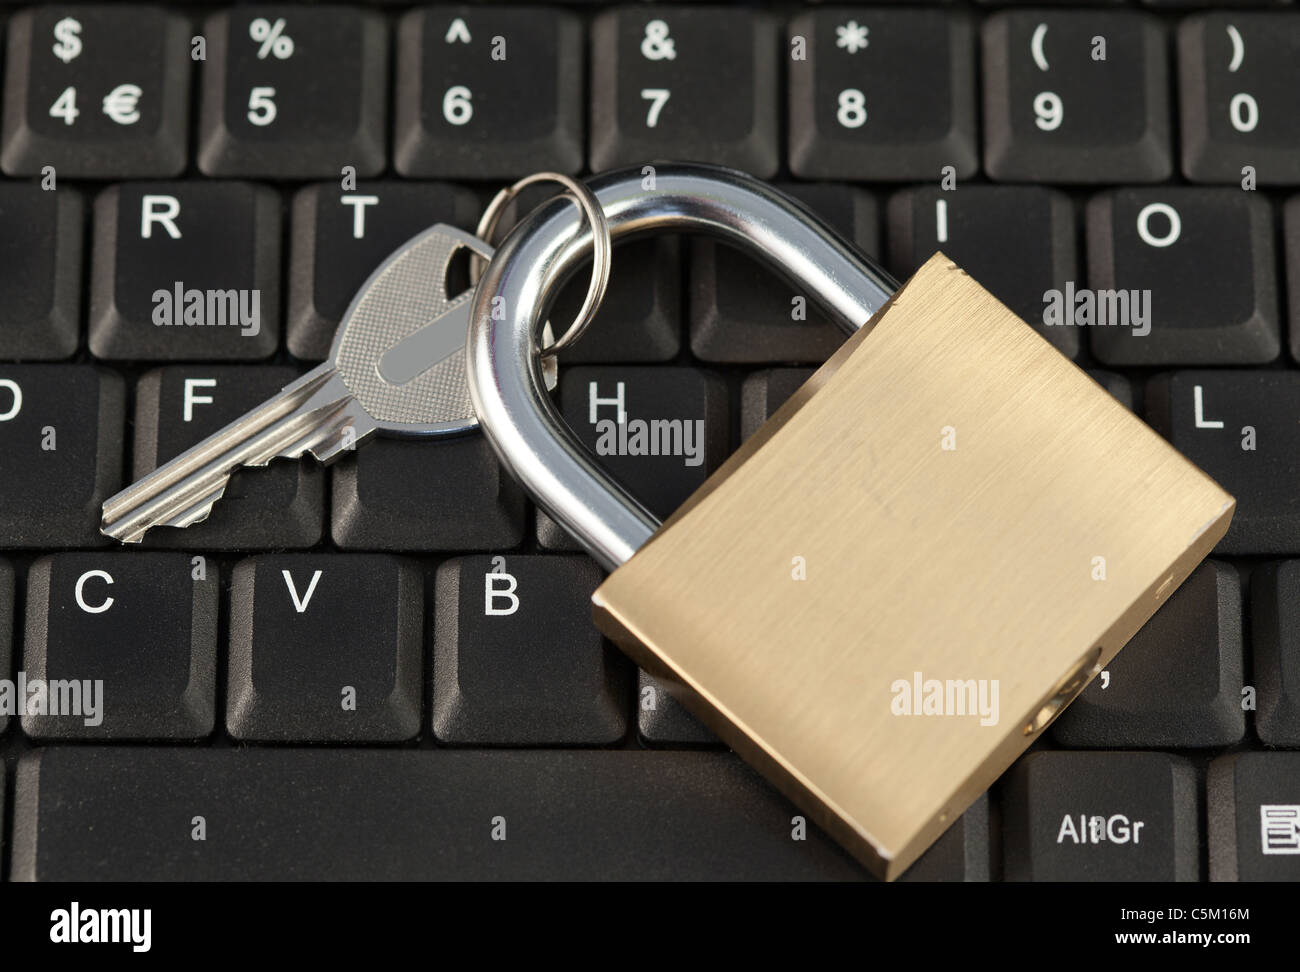 Padlock and key on a keyboard Stock Photo